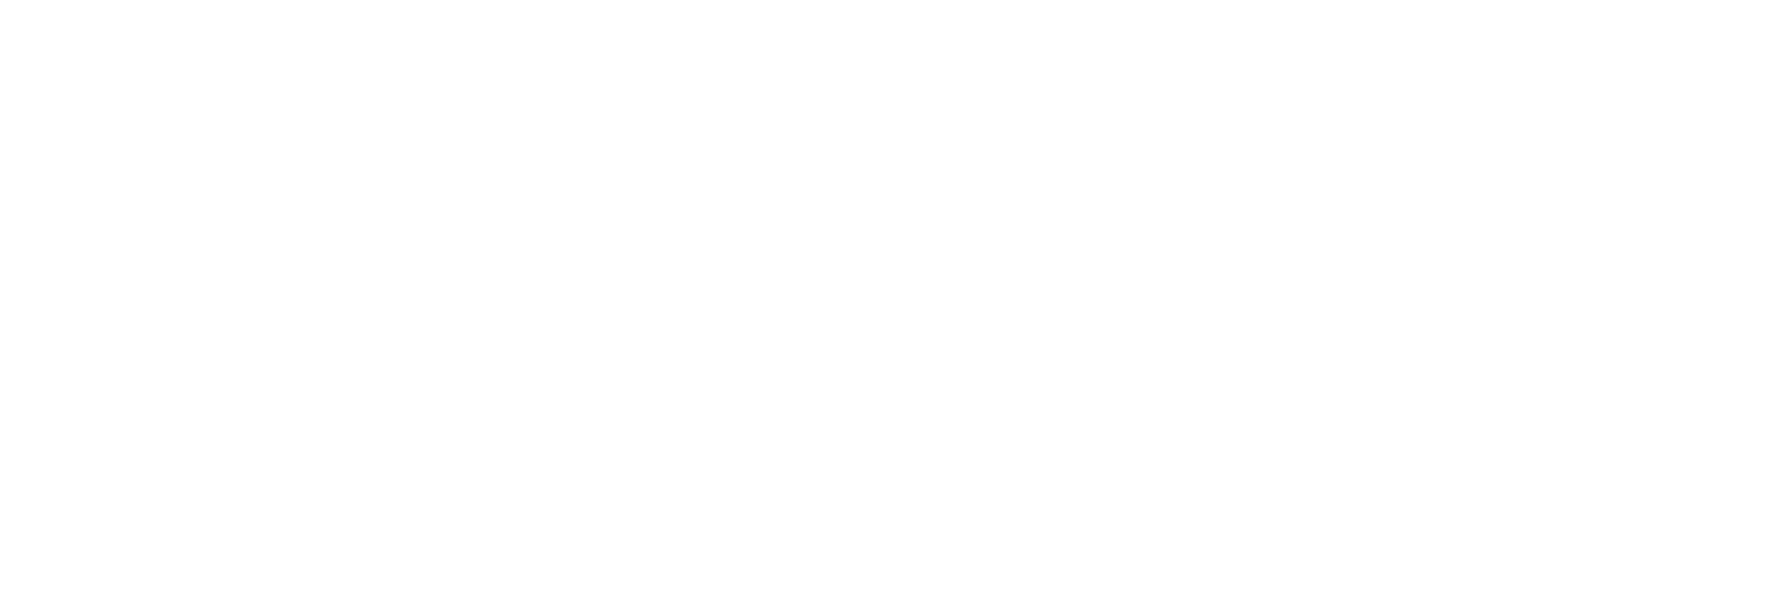 Astera Bio Asset Management LLC